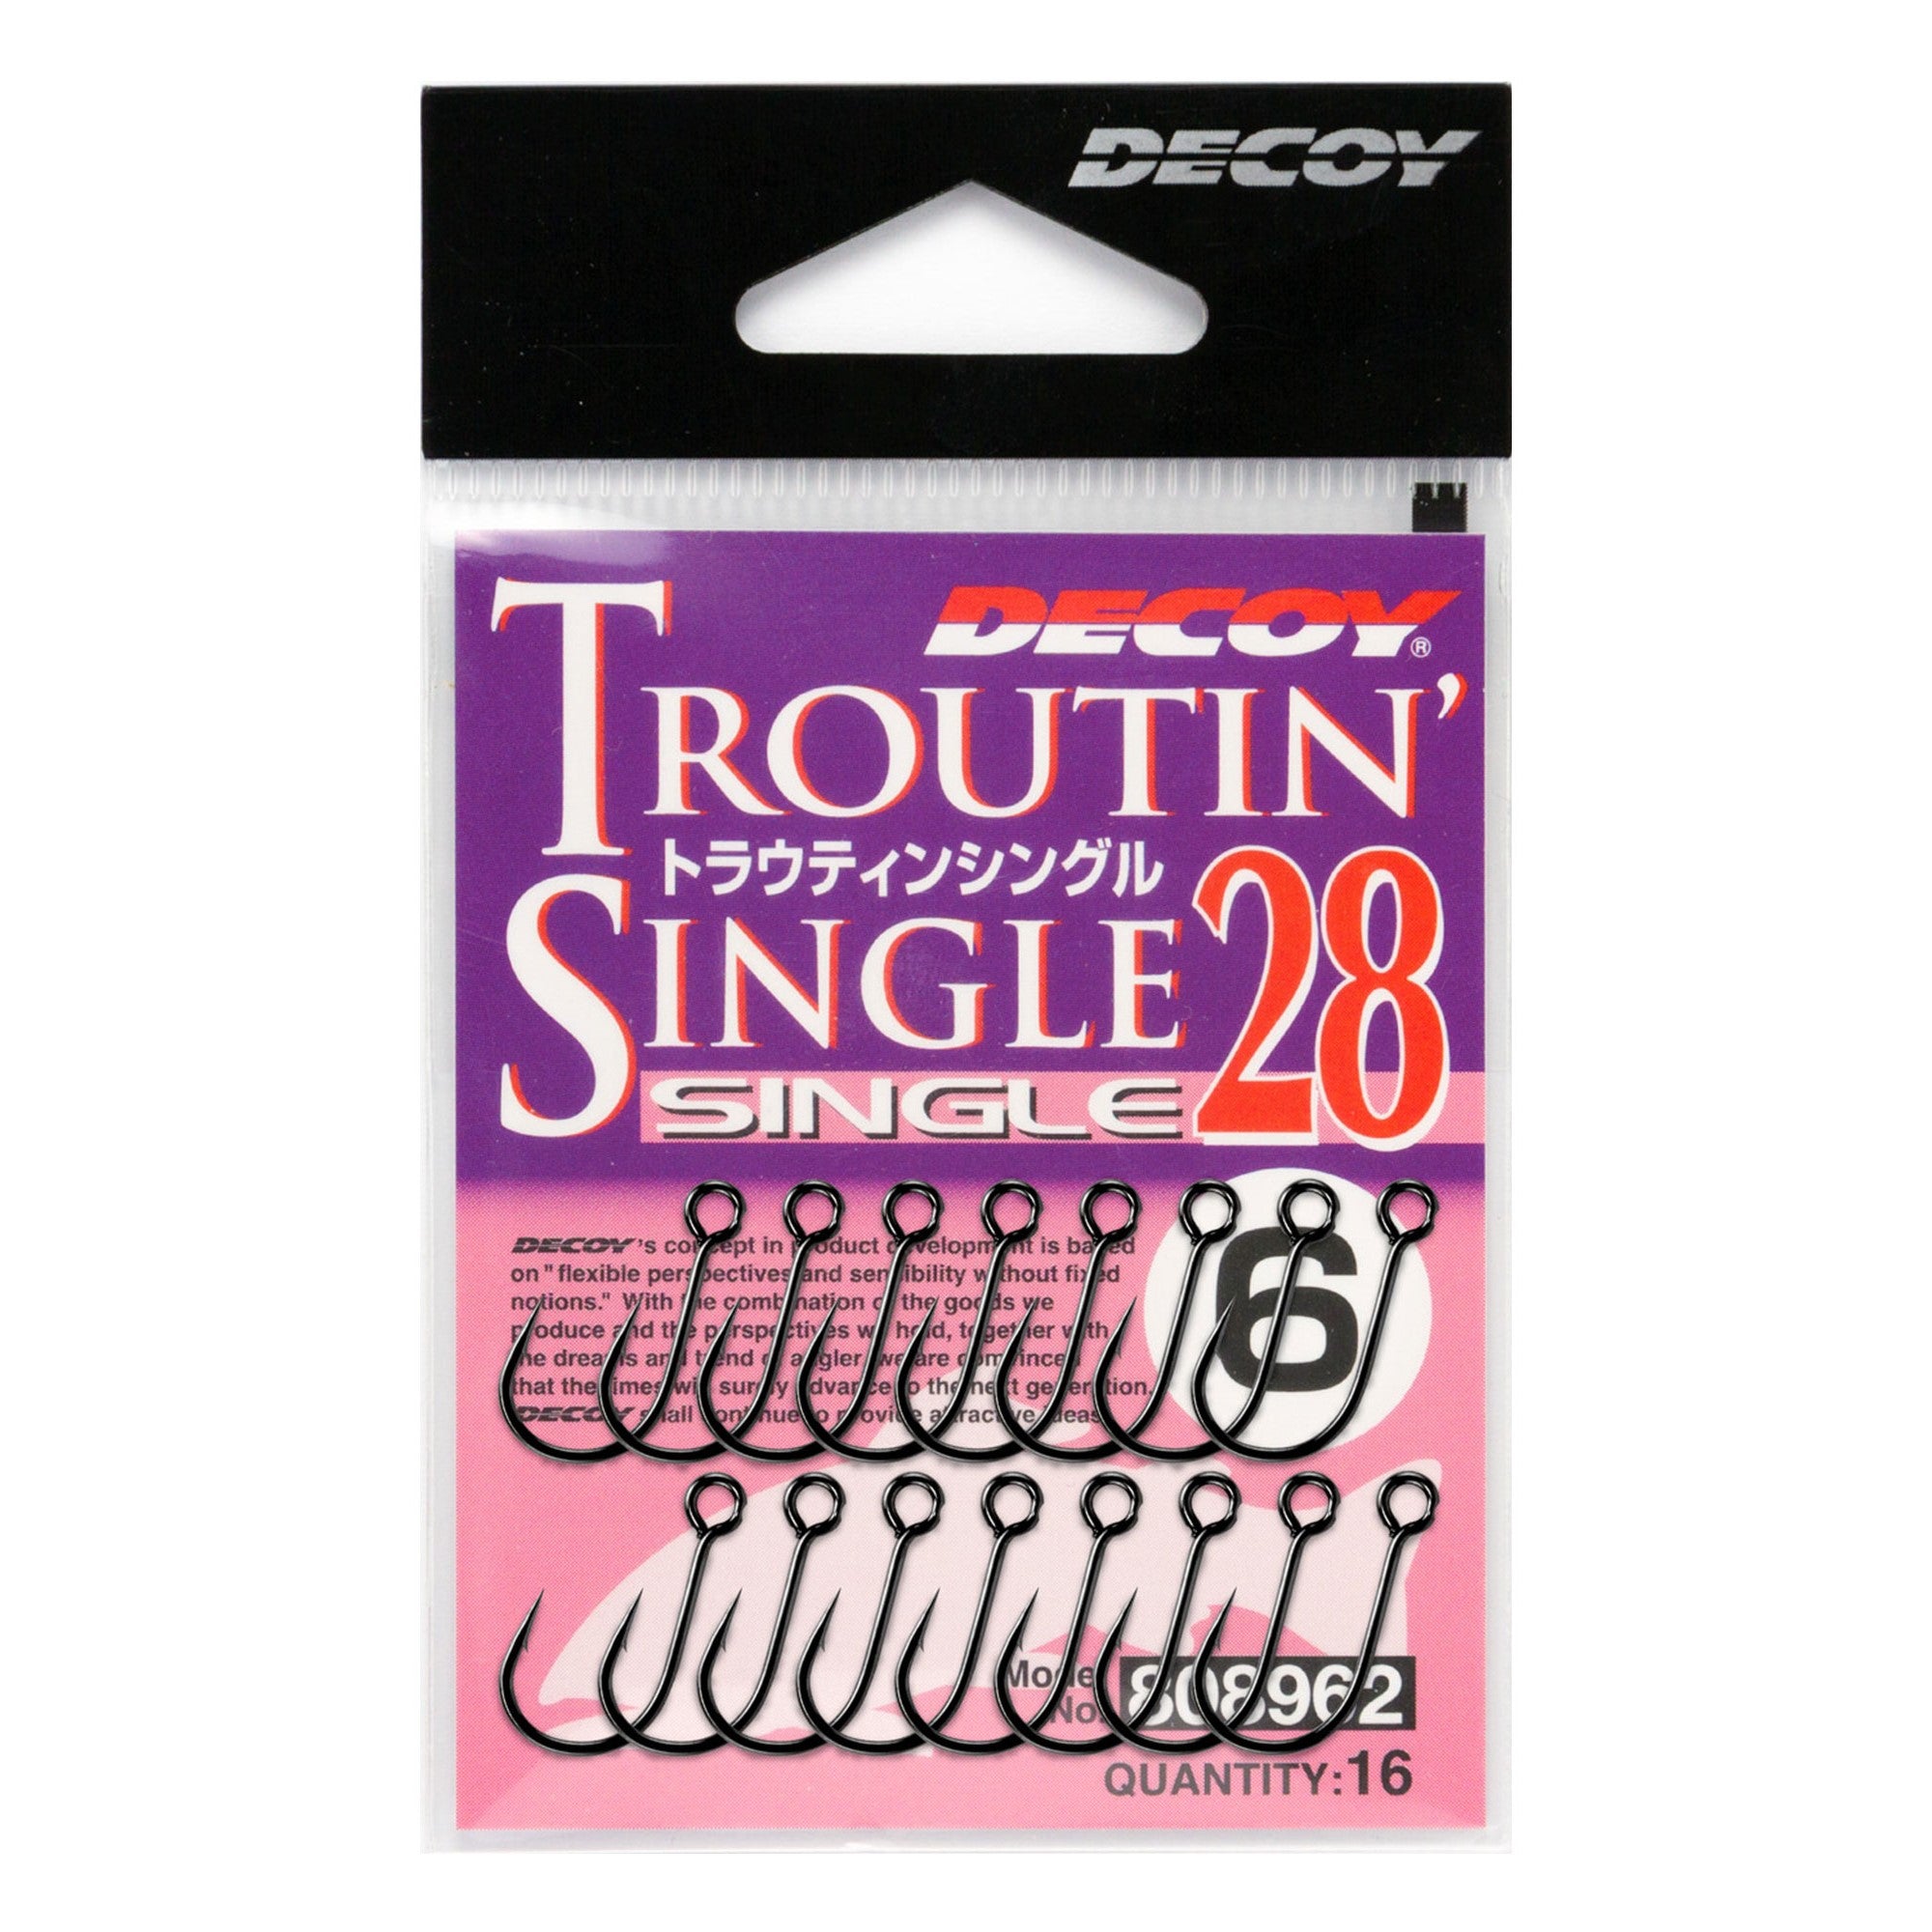 DECOY  Troutin' Single Single28